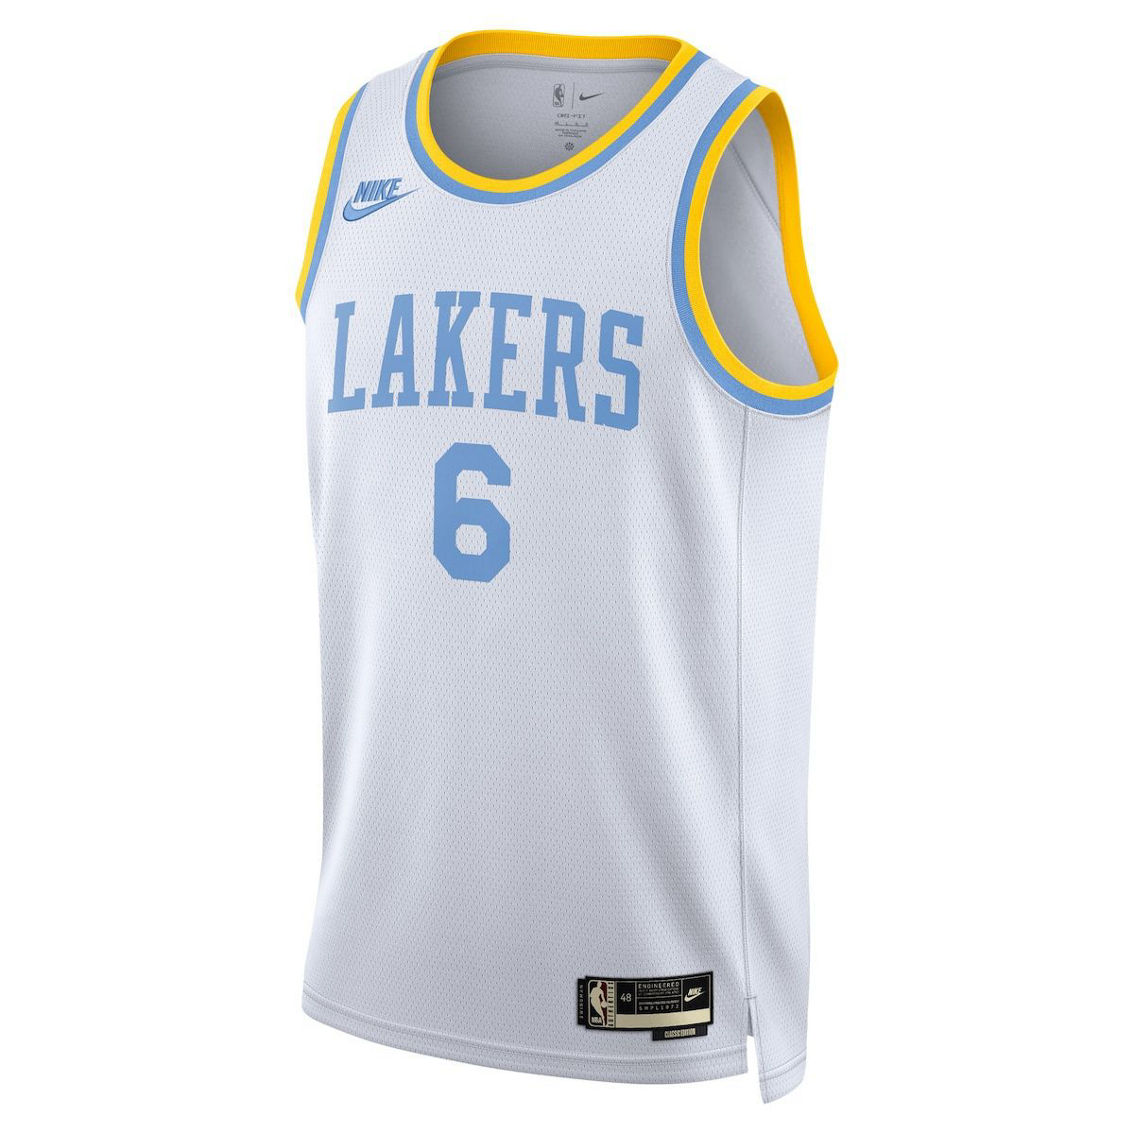 Nike Men's LeBron James White Los Angeles Lakers Swingman Jersey - Classic Edition - Image 3 of 4